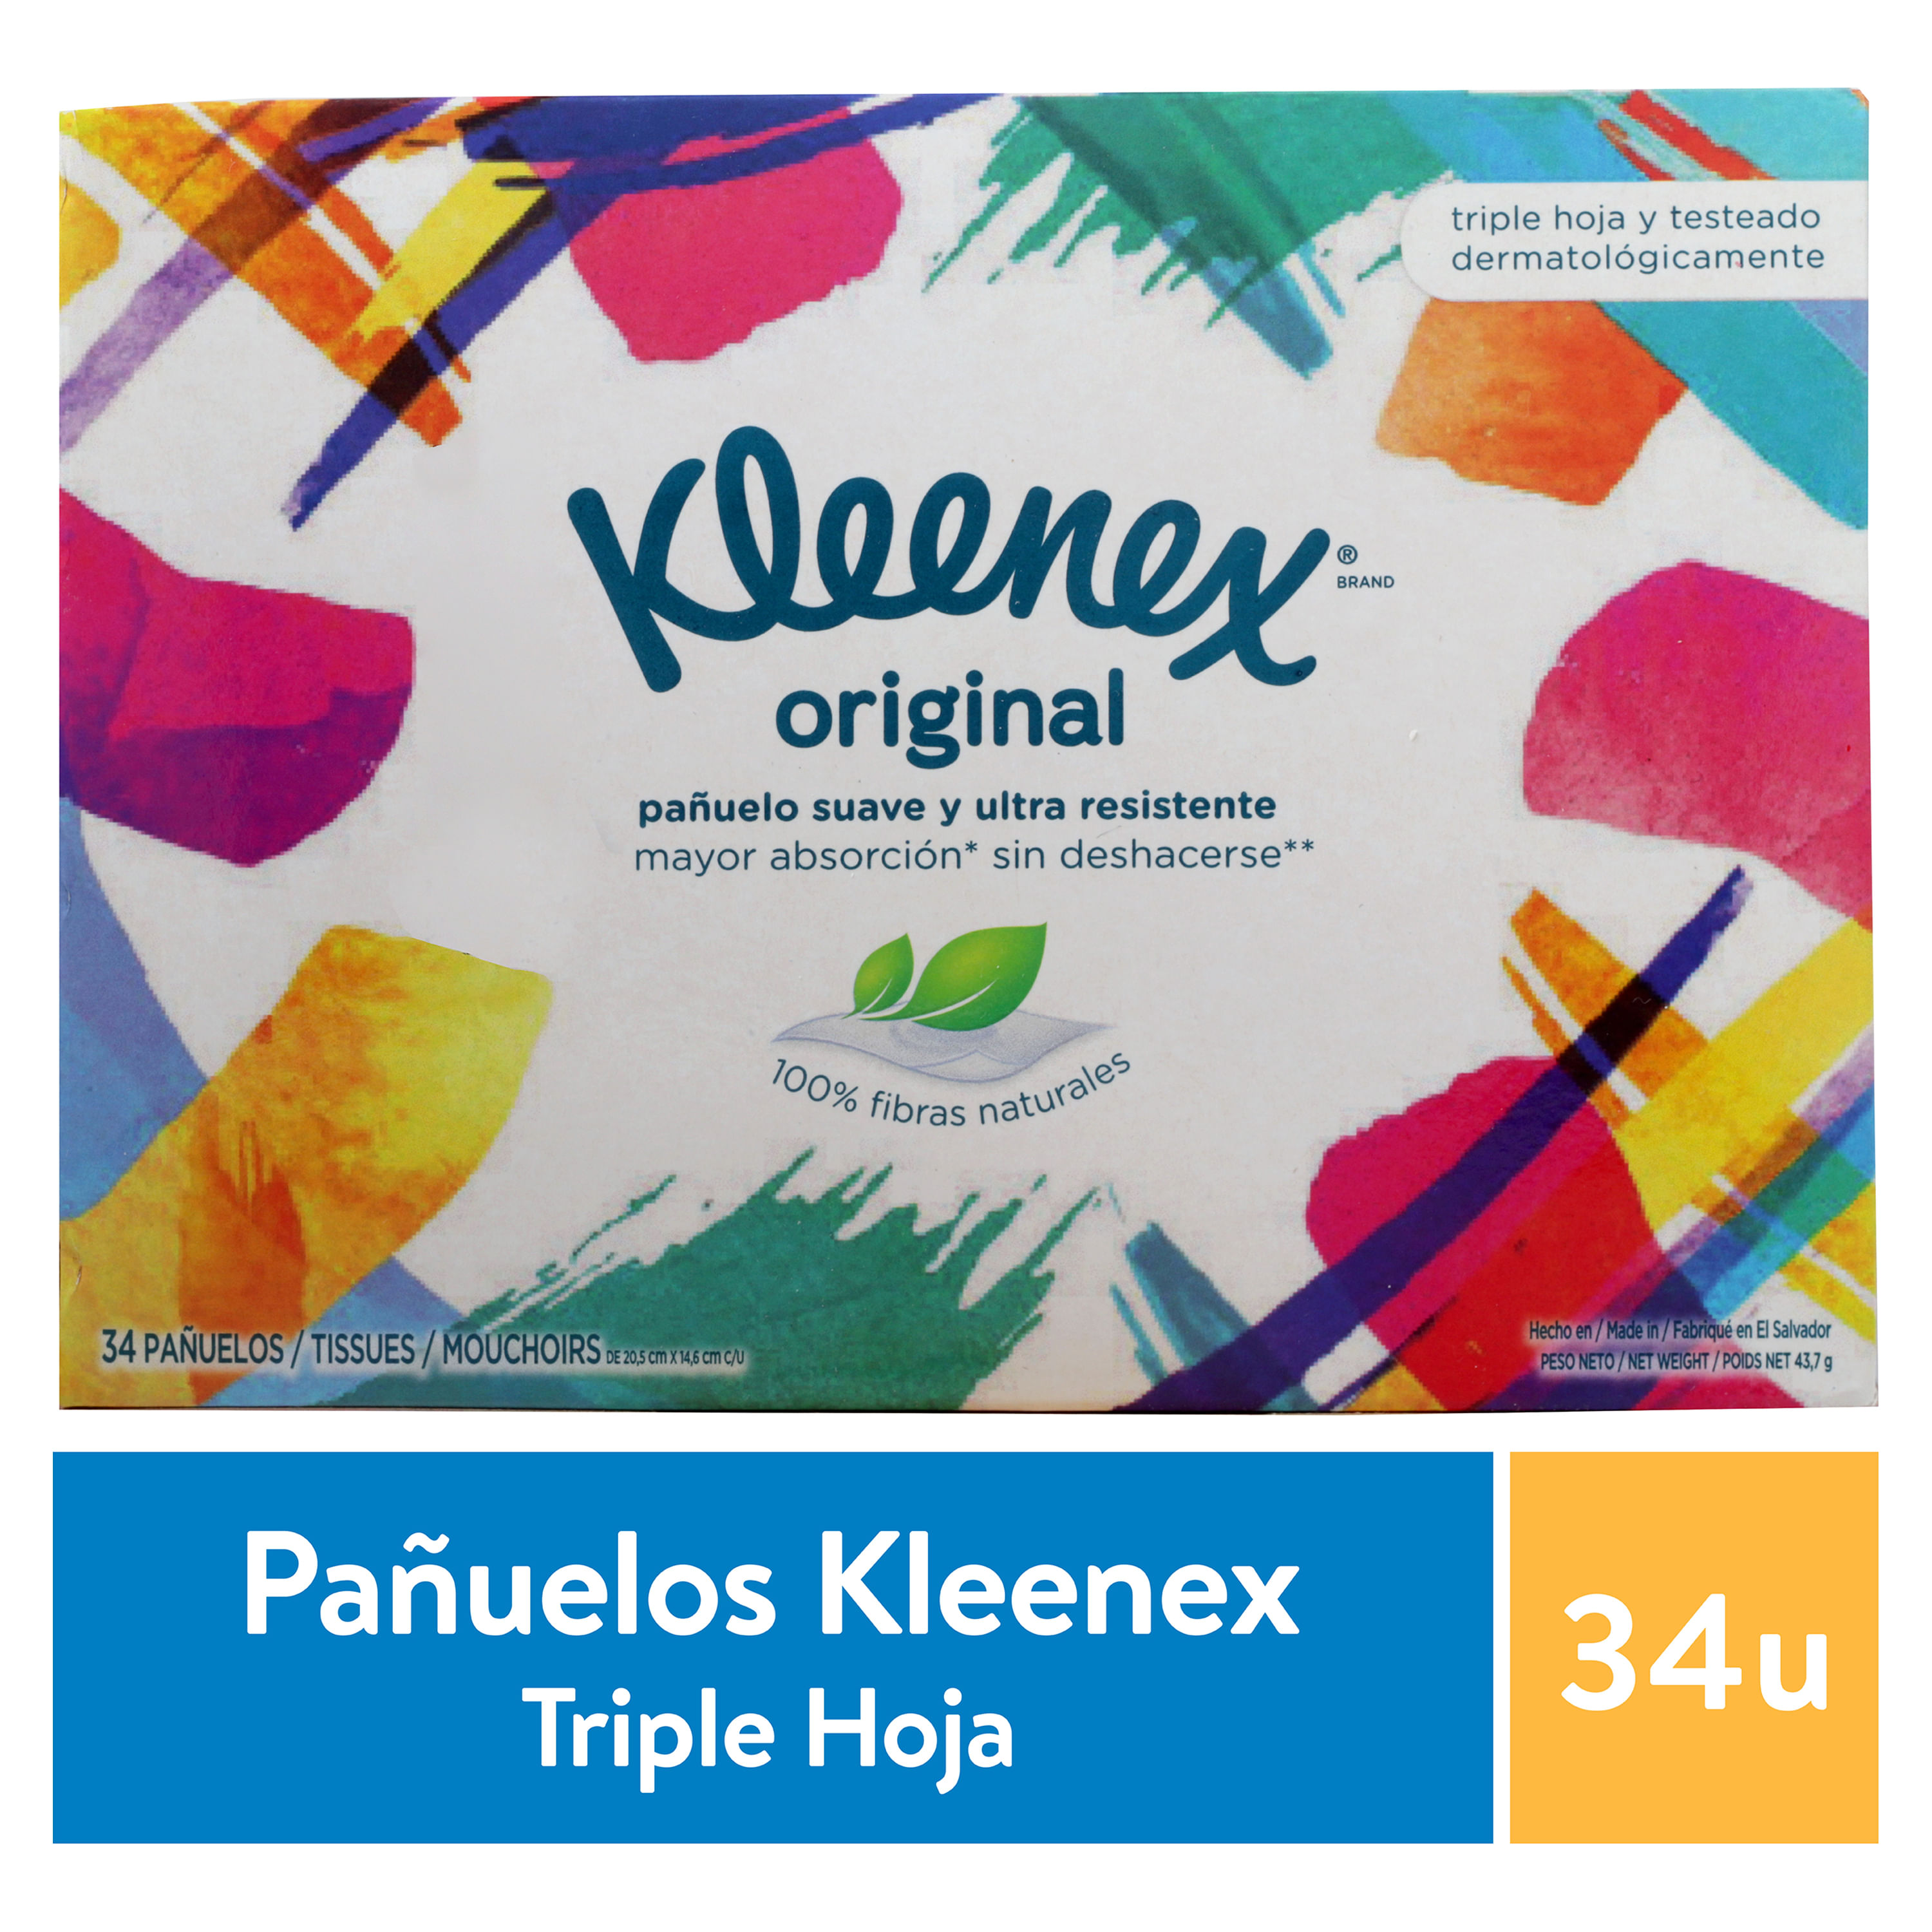 FARMACIA UNIVERSAL - Kleenex Pocket x 4 Paquetes con 10 Pañuelos c/u